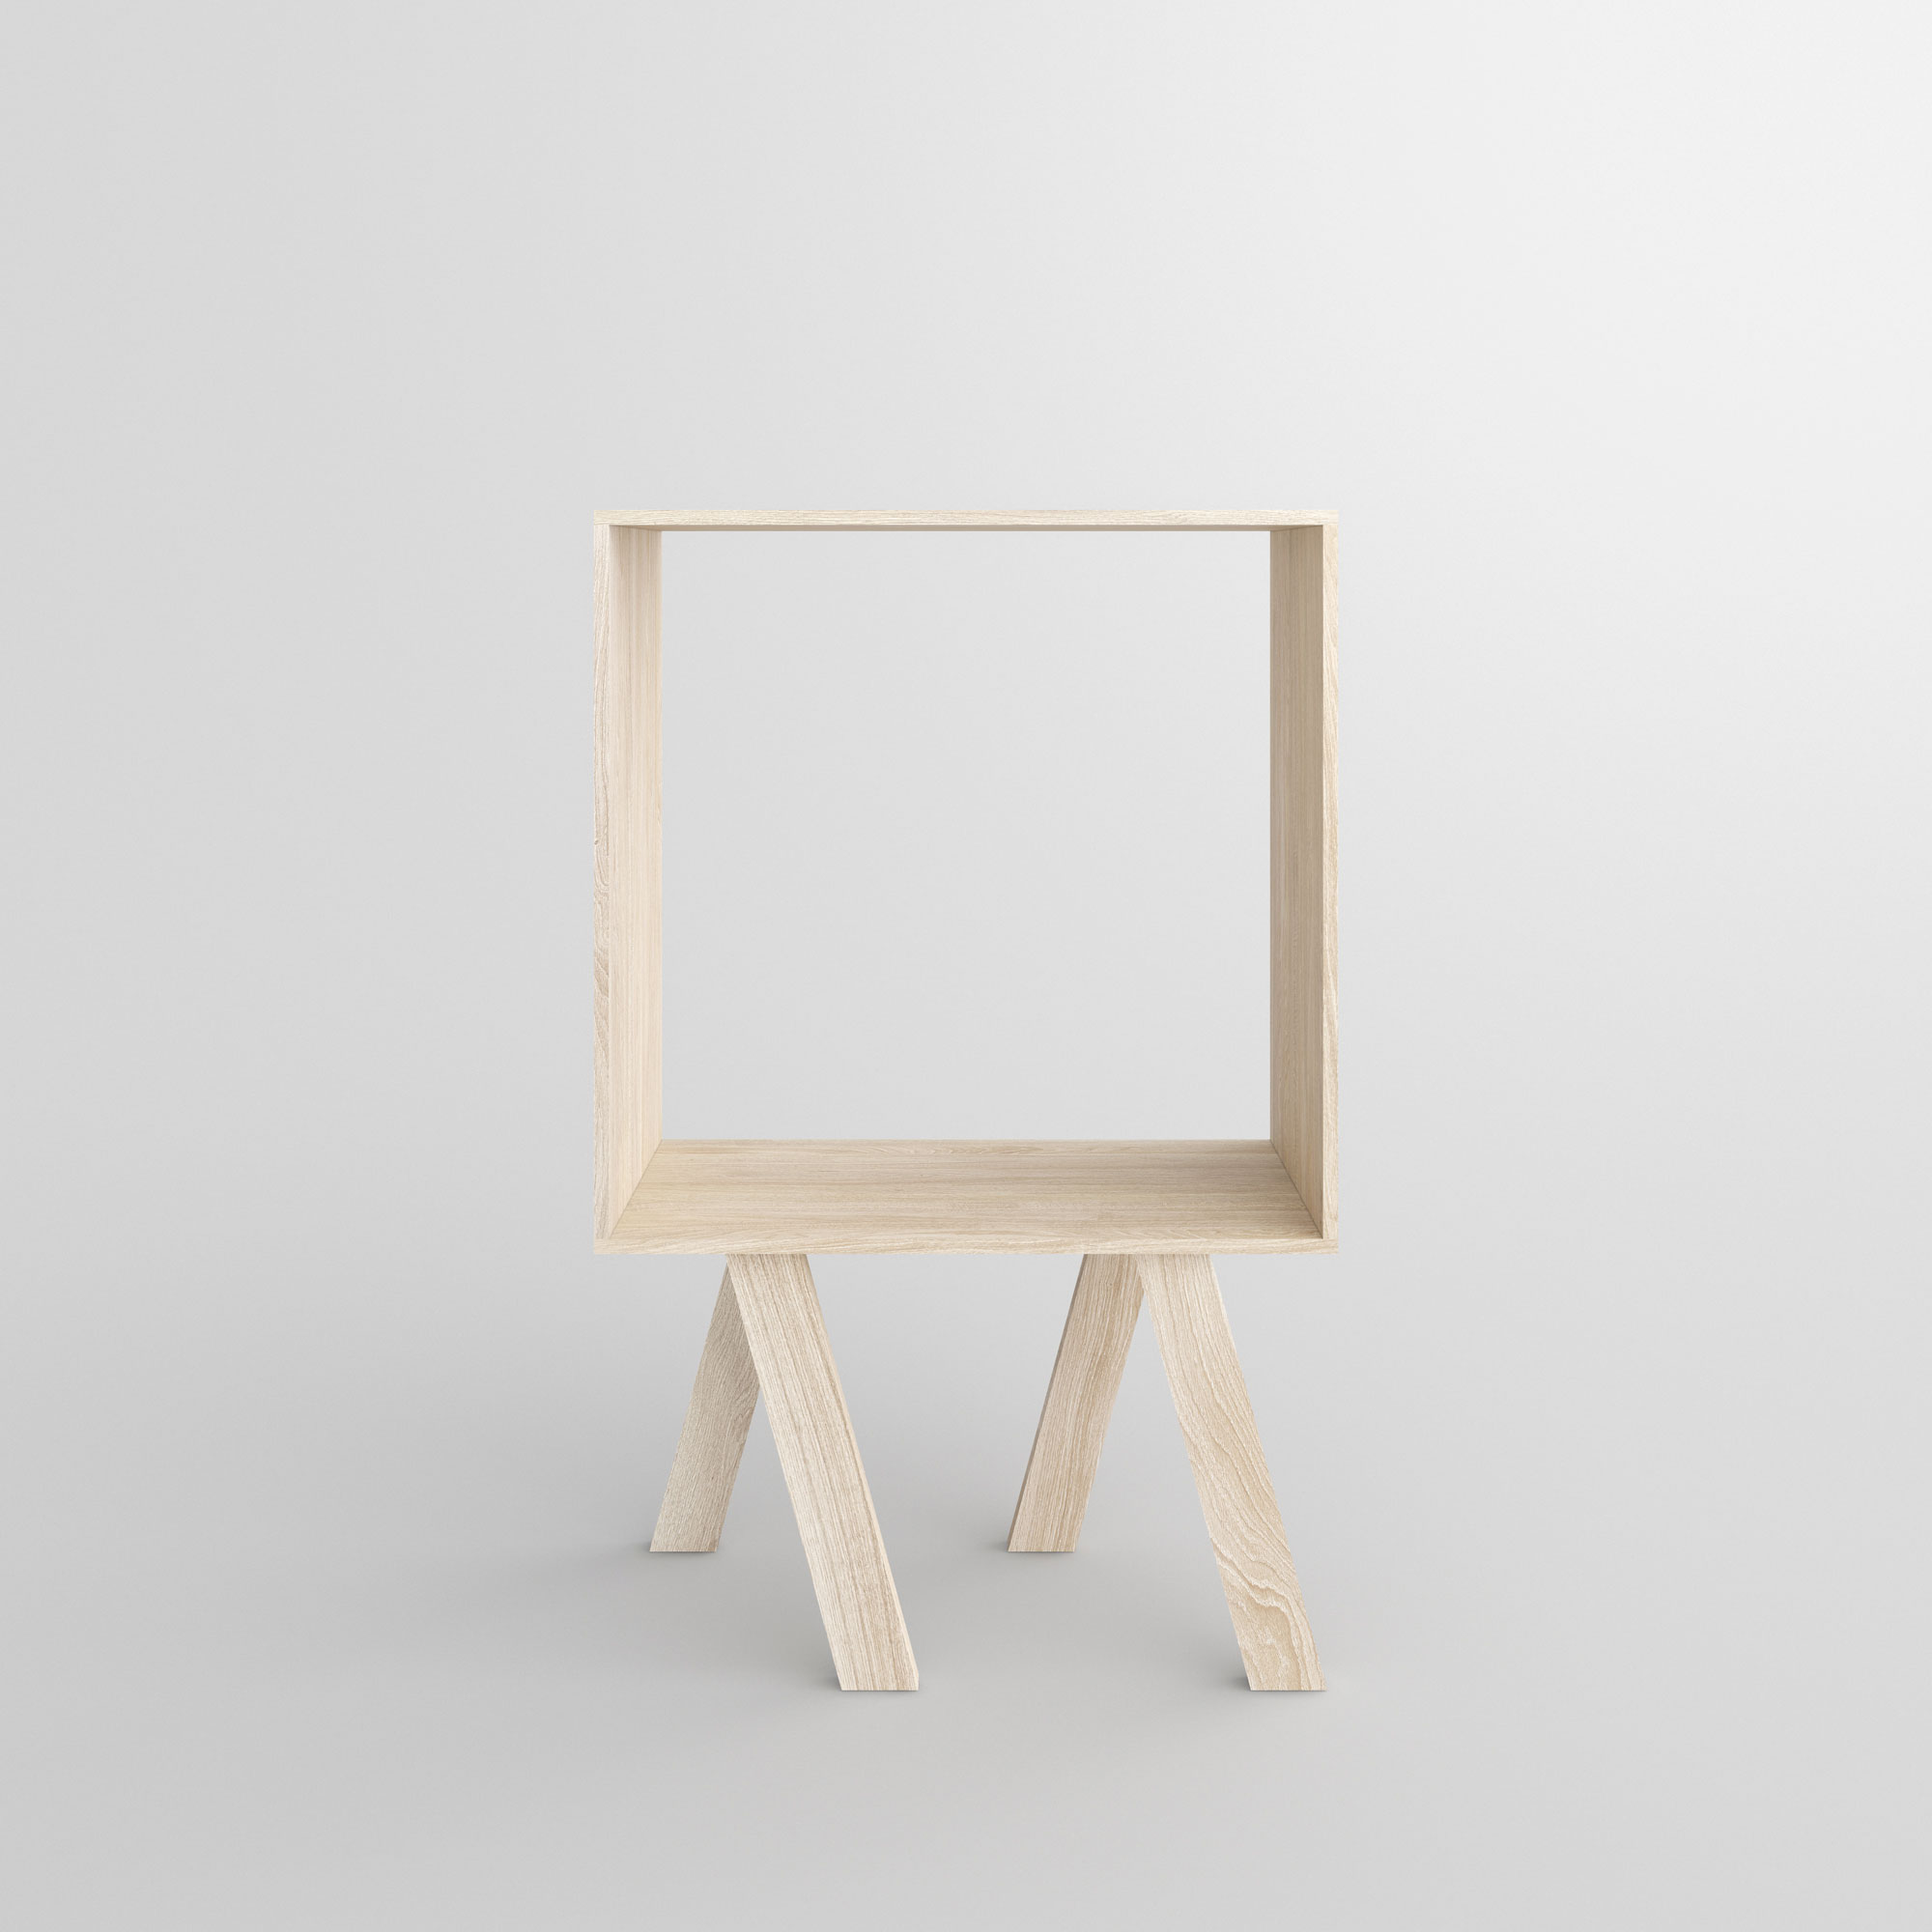 Designer Solid Wood Shelf GO 0000 custom made in solid wood by vitamin design